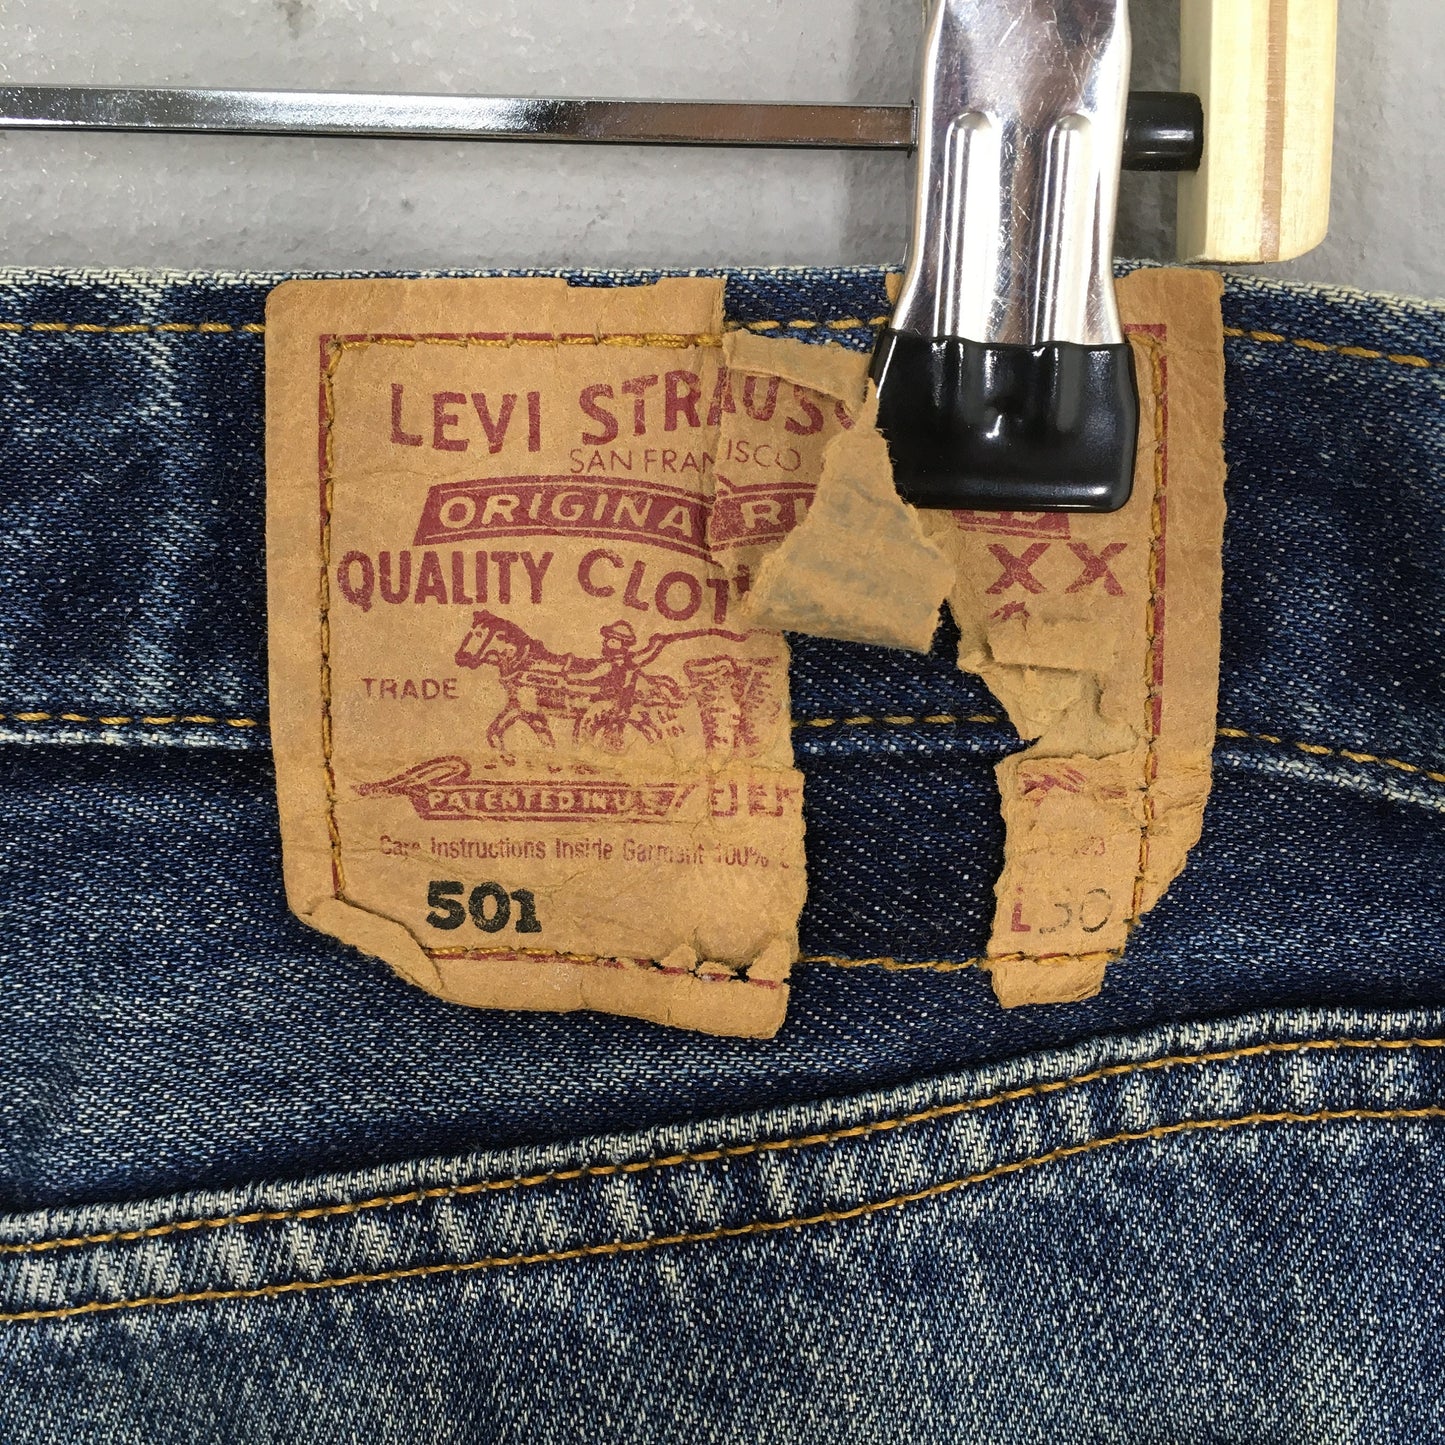 Levi's 501 Faded Blue Stonewash Jeans Size 29x29.5